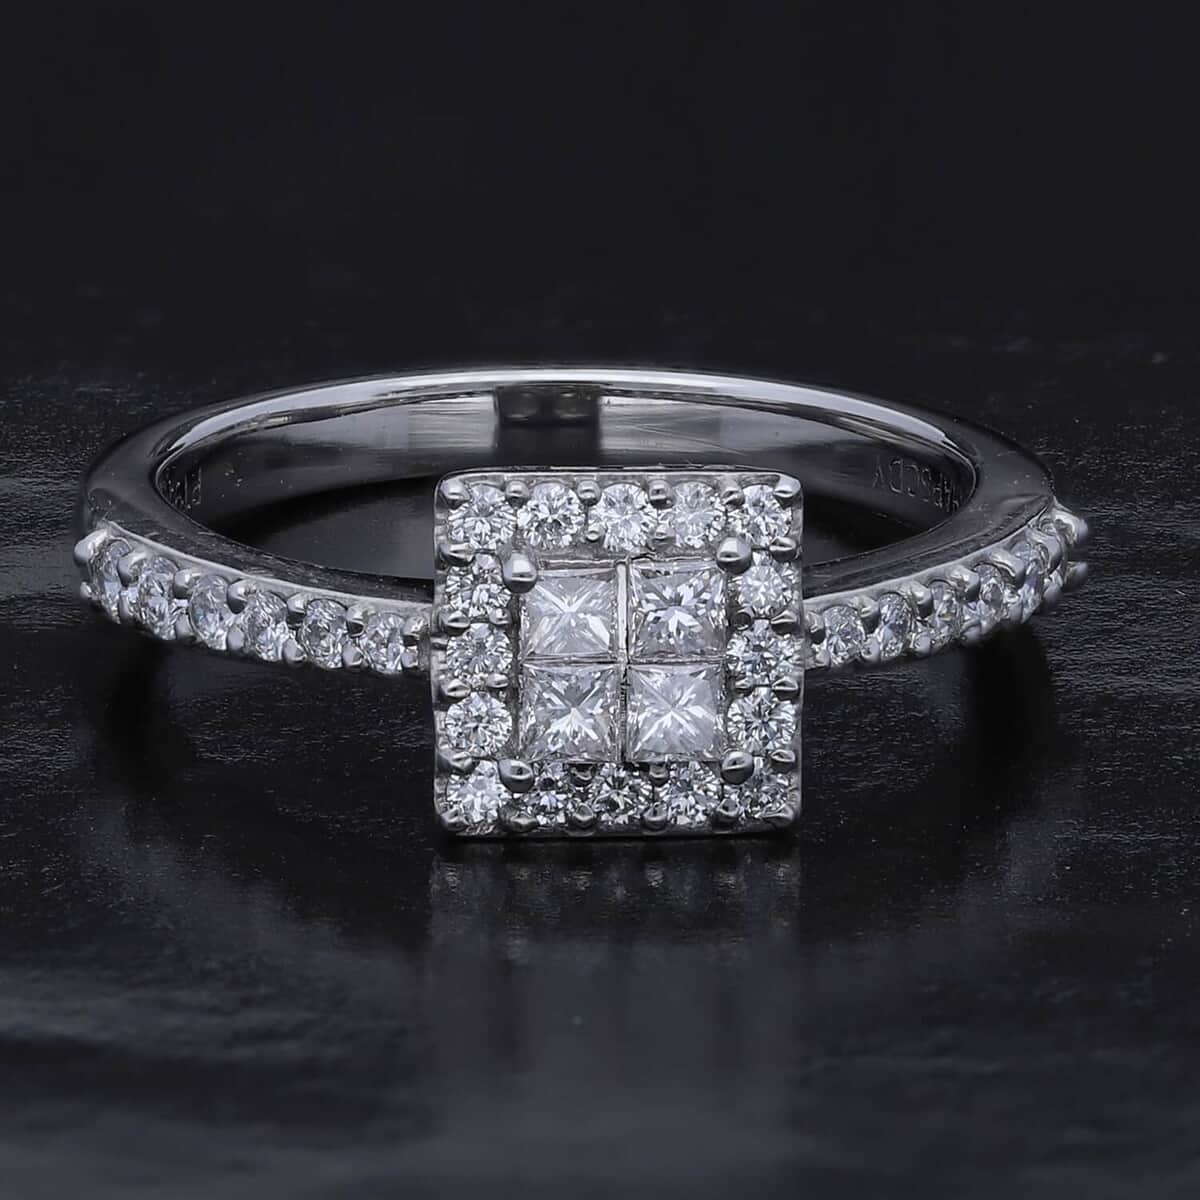 Rhapsody 950 Platinum E-F VS Diamond Ring (Size 7.0) 4.75 Grams 0.50 ctw image number 1